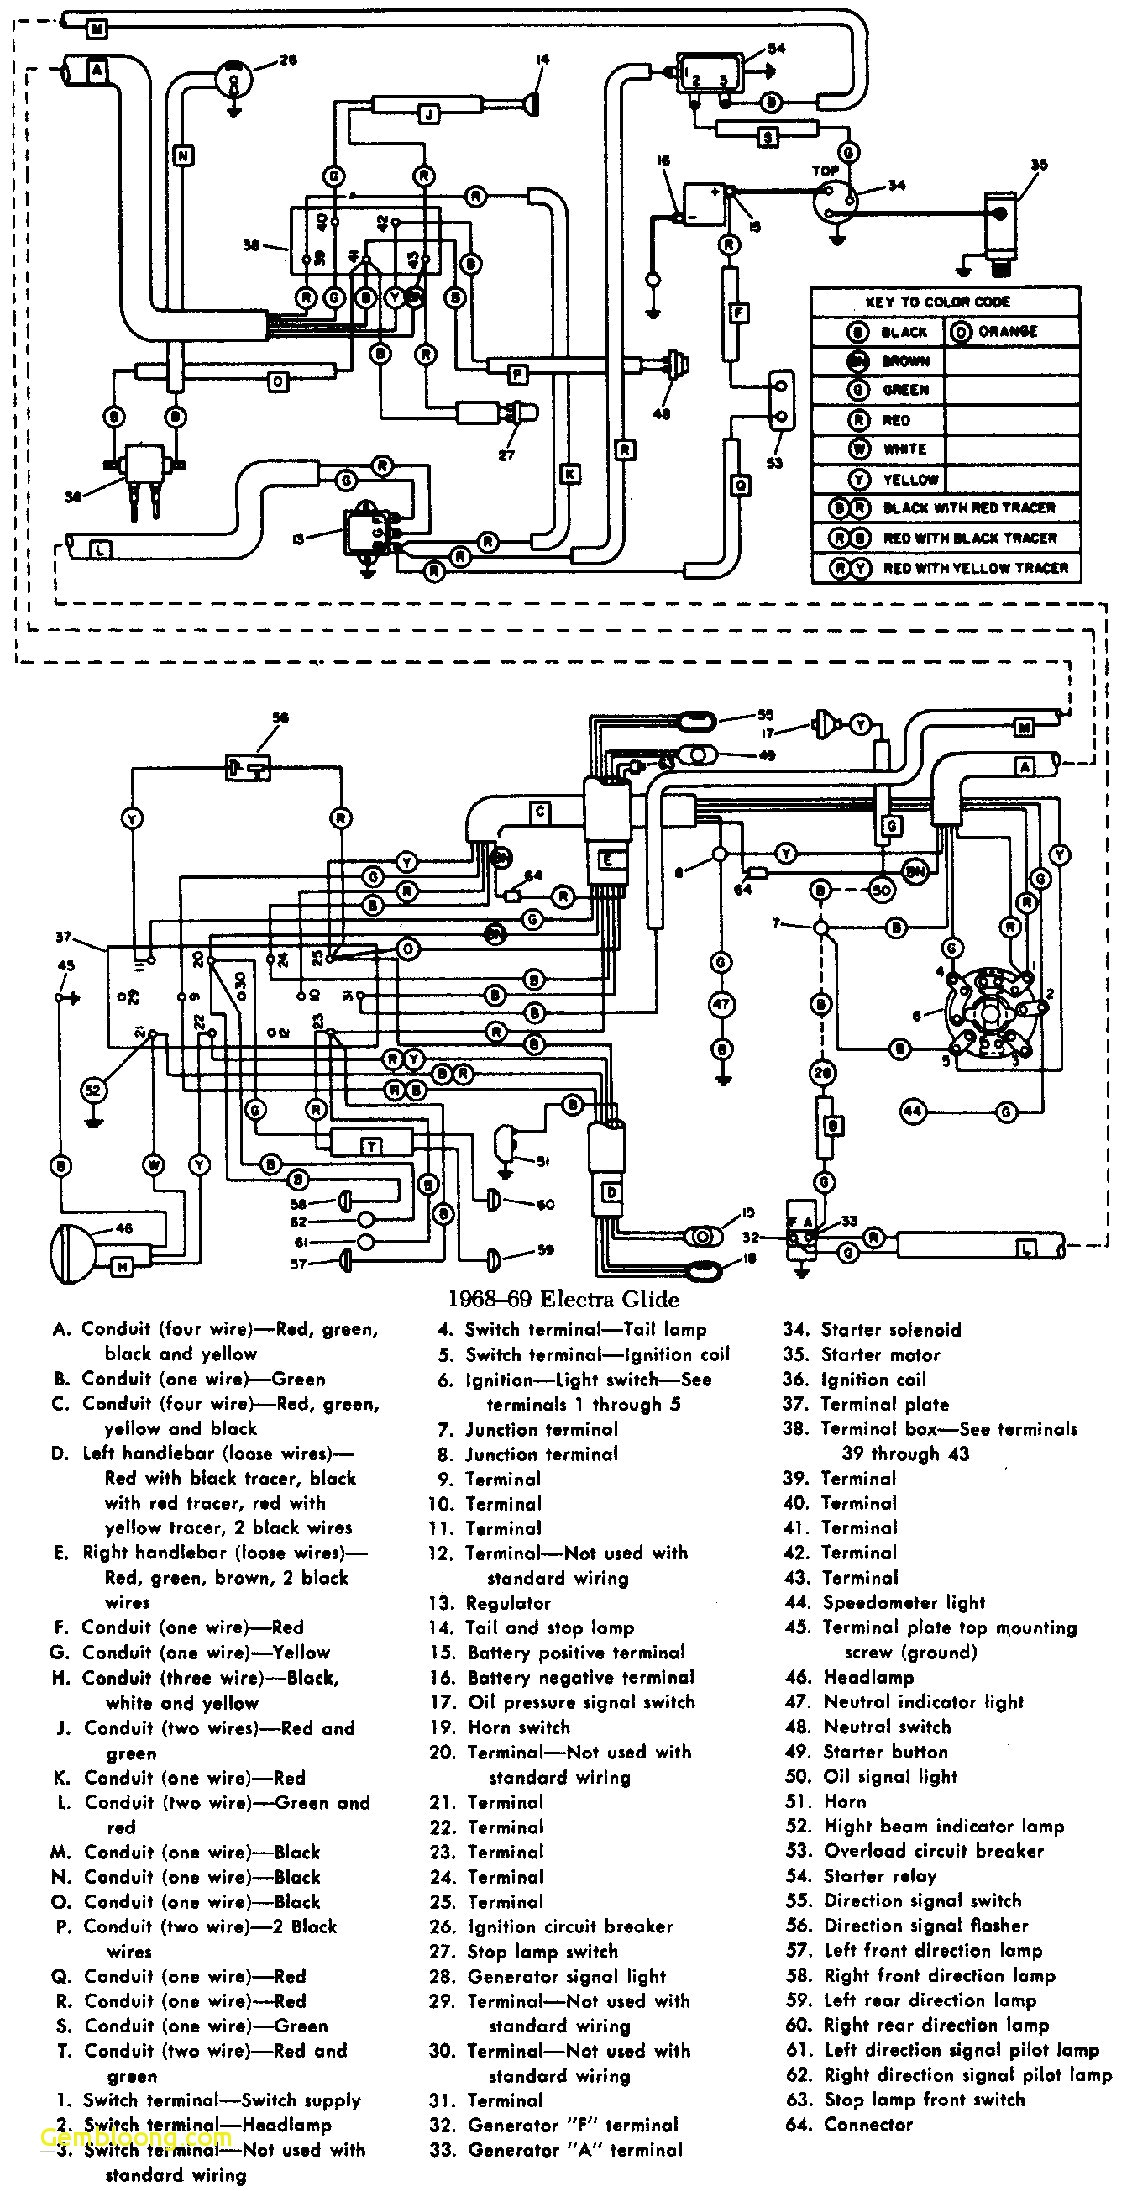 free ford xy gt wiring diagram harley radio wiring harness